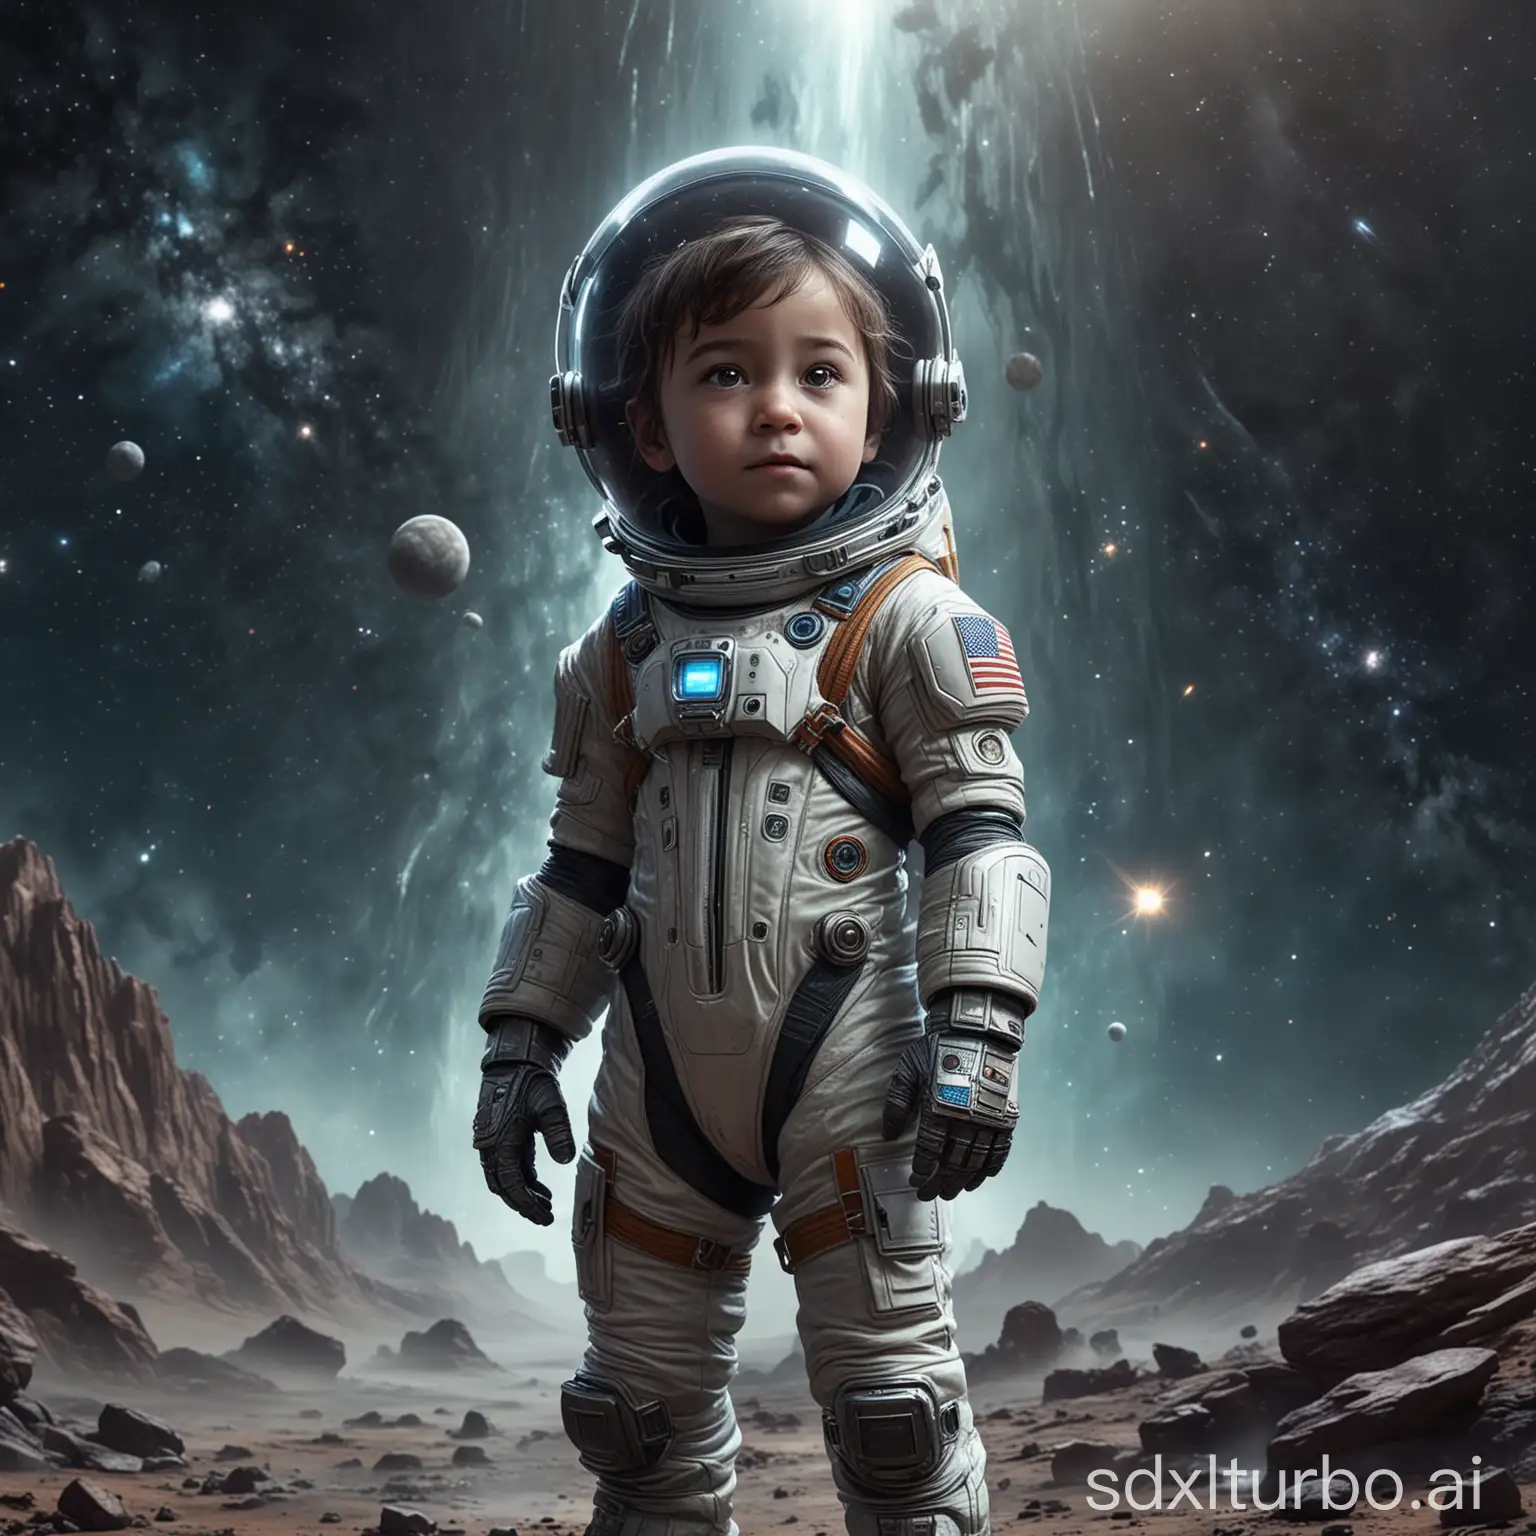 Young-Astronaut-in-Futuristic-Space-Suit-Explores-Interstellar-Nebula